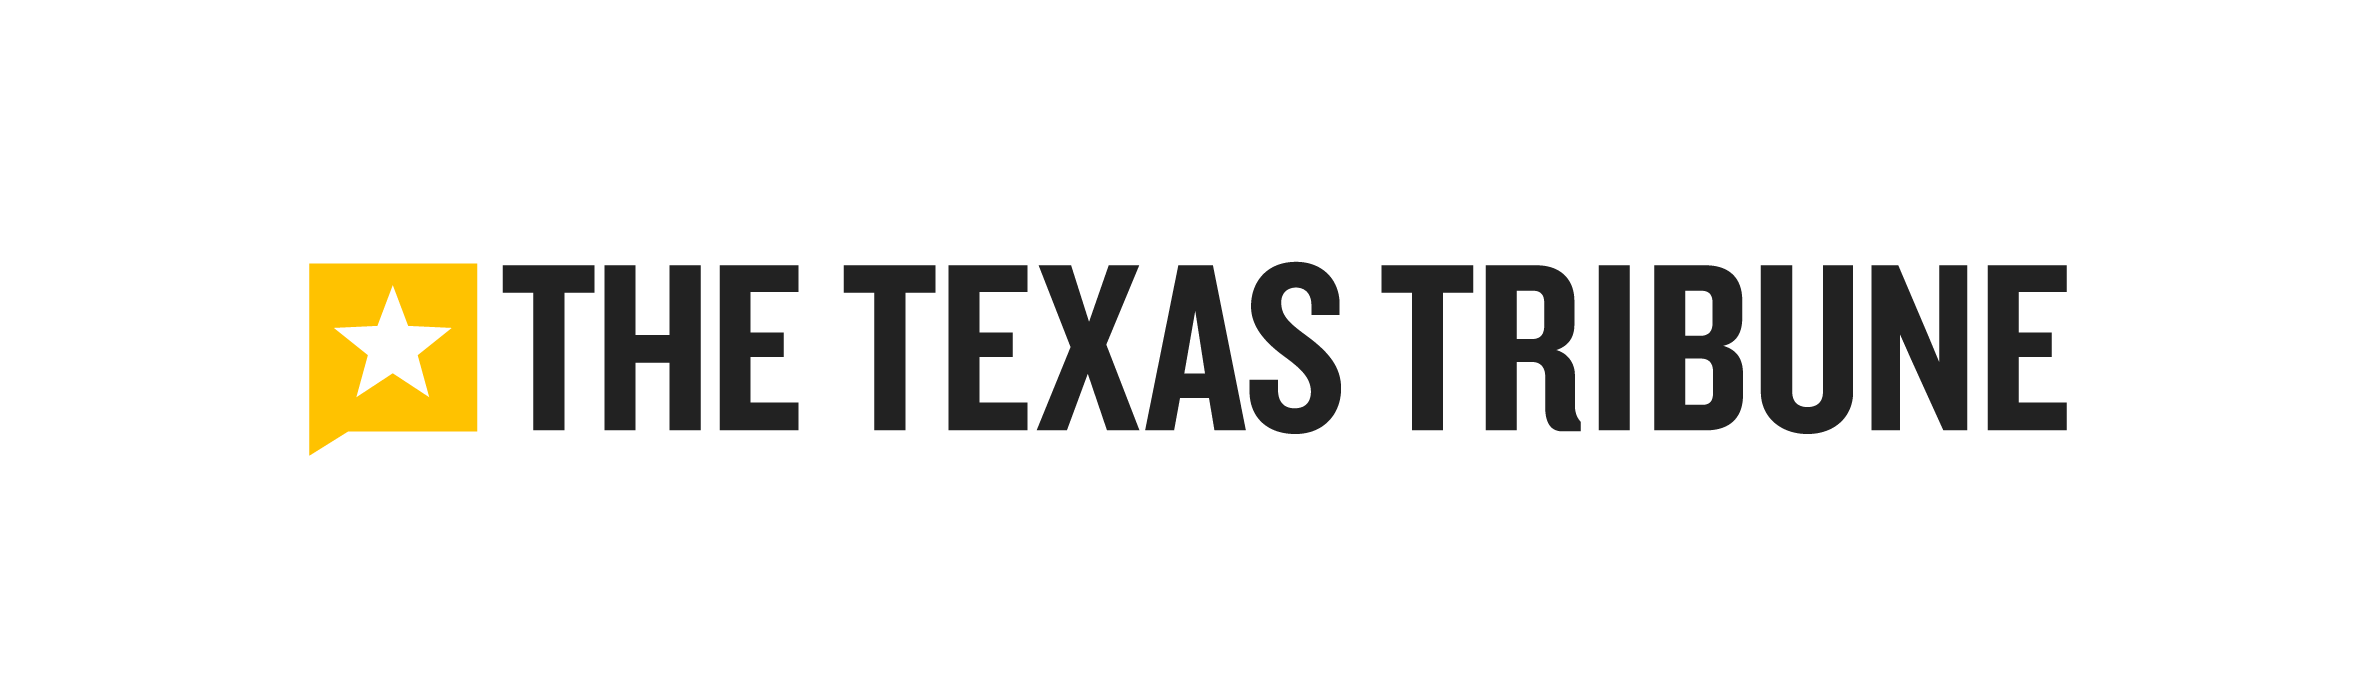 Texas Tribune Logo.png